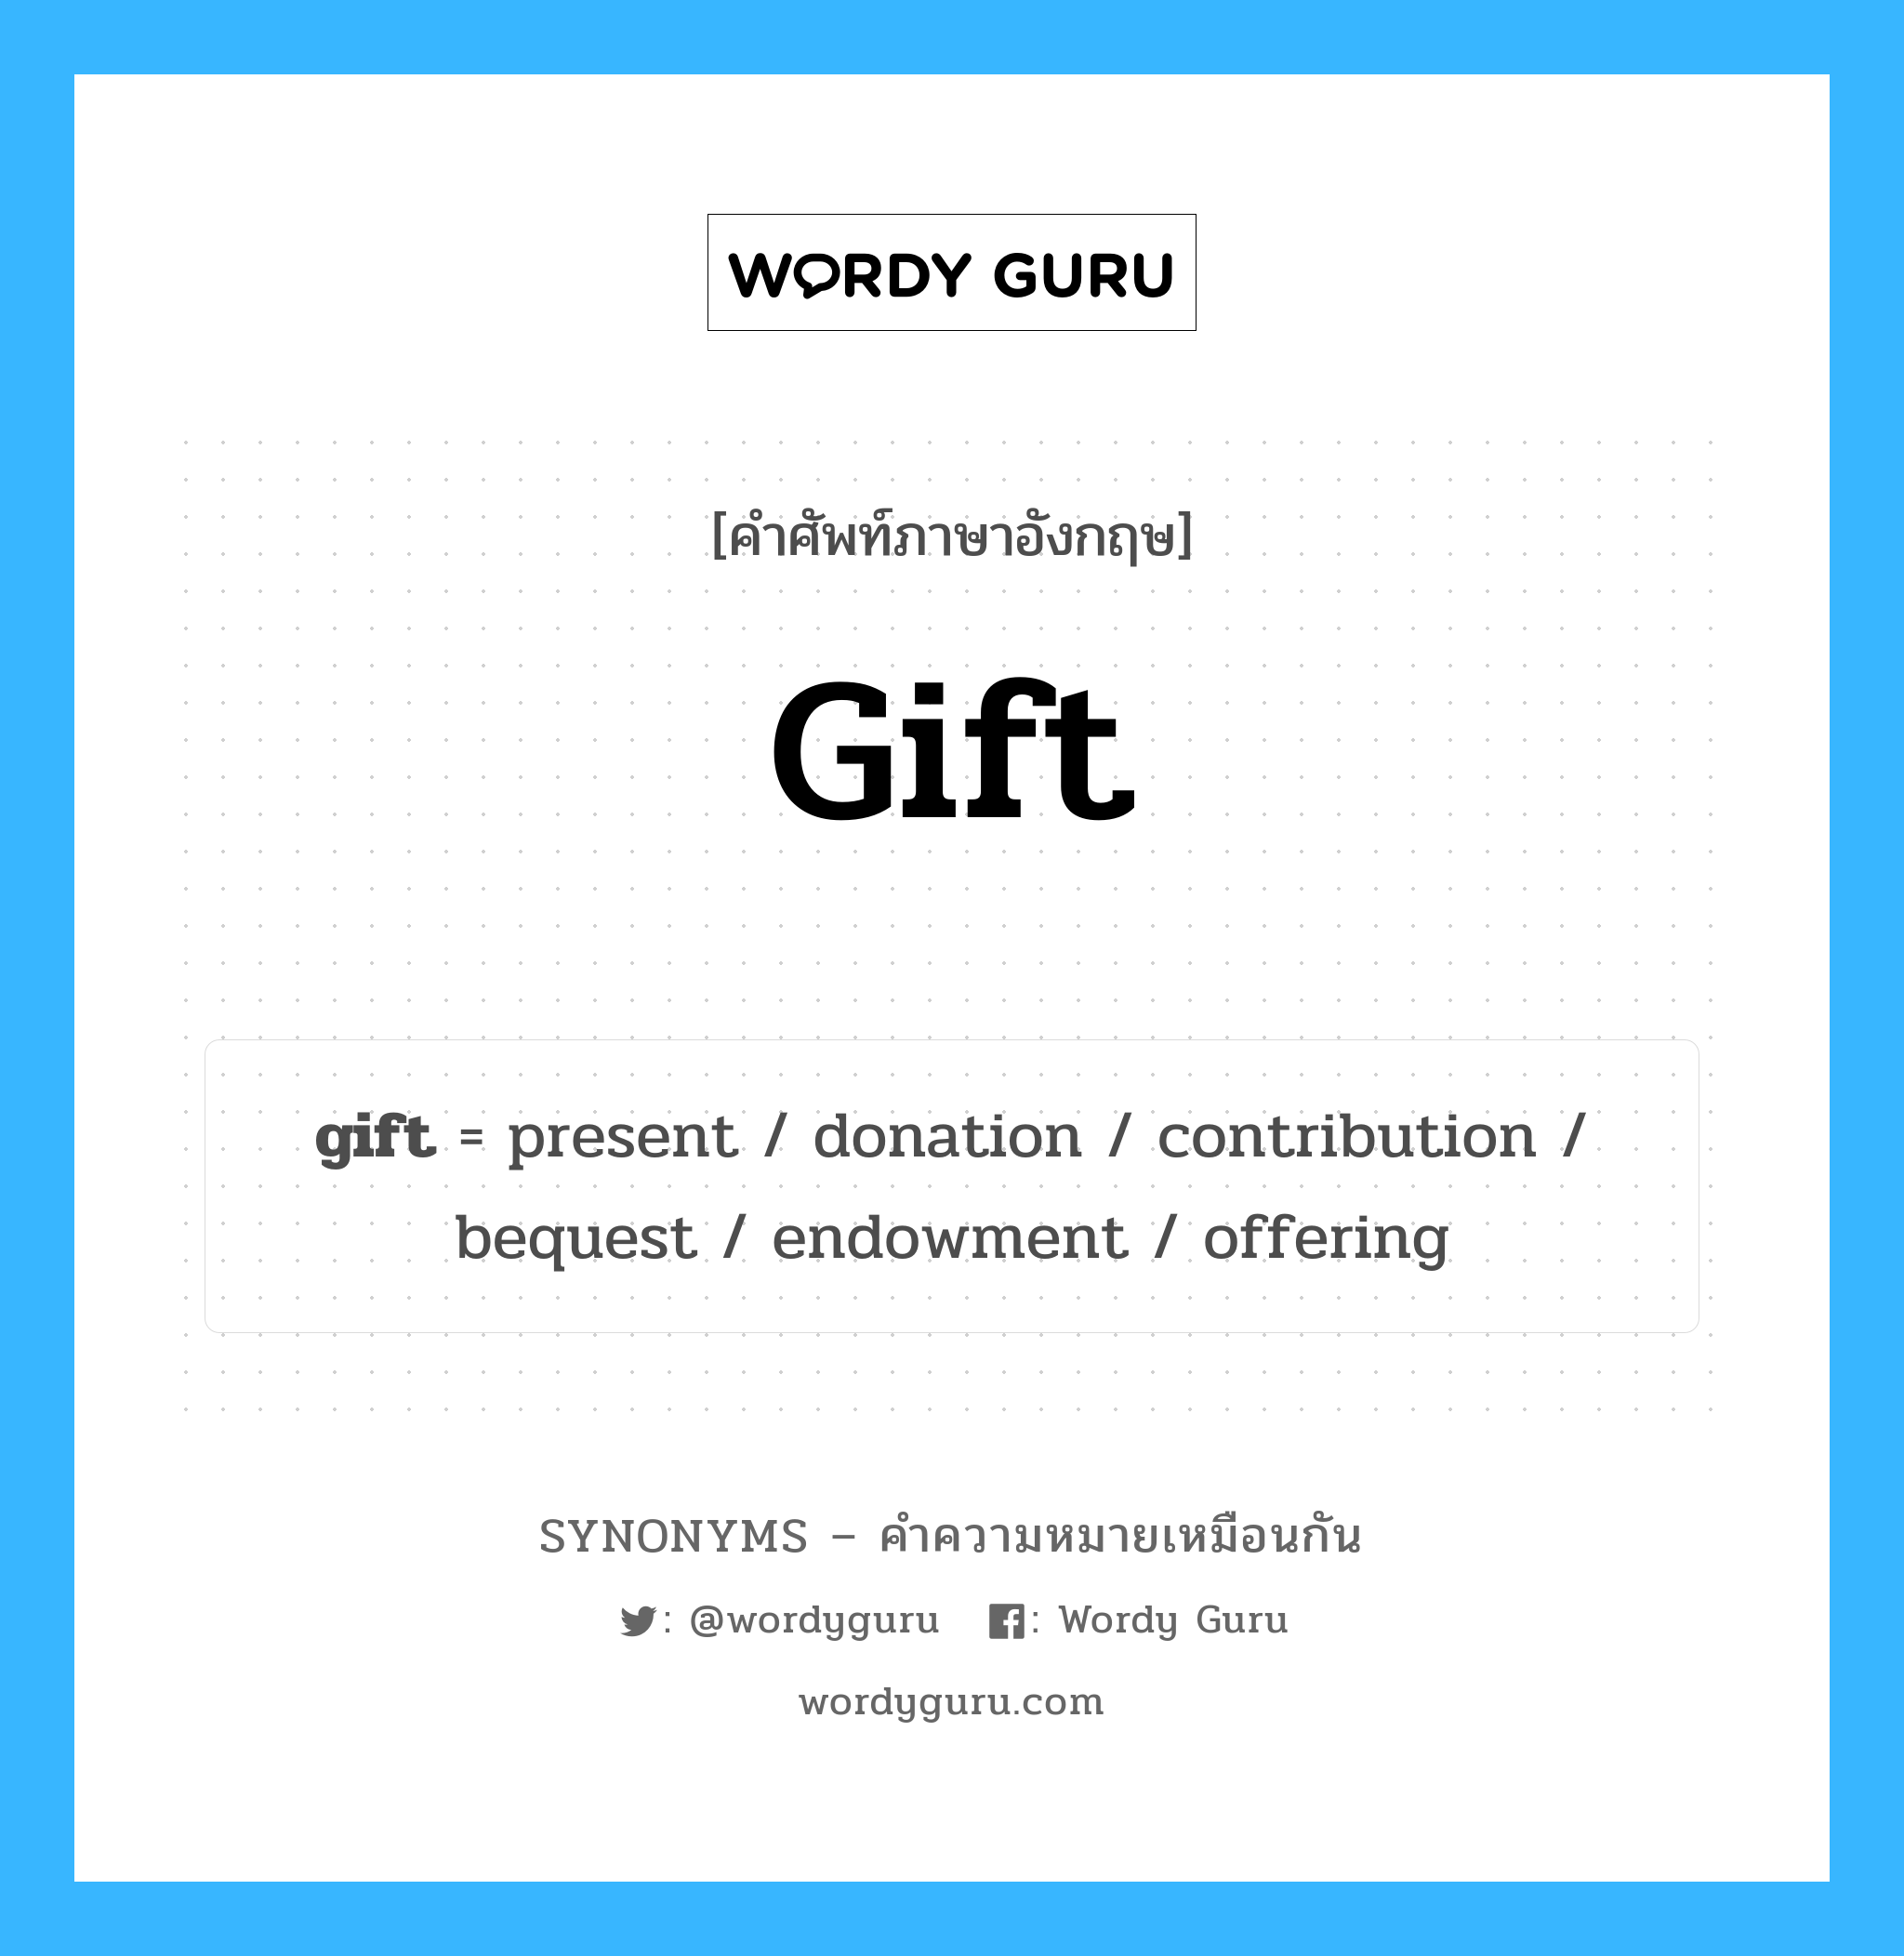 bequest เป็นหนึ่งใน gift และมีคำอื่น ๆ อีกดังนี้, คำศัพท์ภาษาอังกฤษ bequest ความหมายคล้ายกันกับ gift แปลว่า มรดก หมวด gift